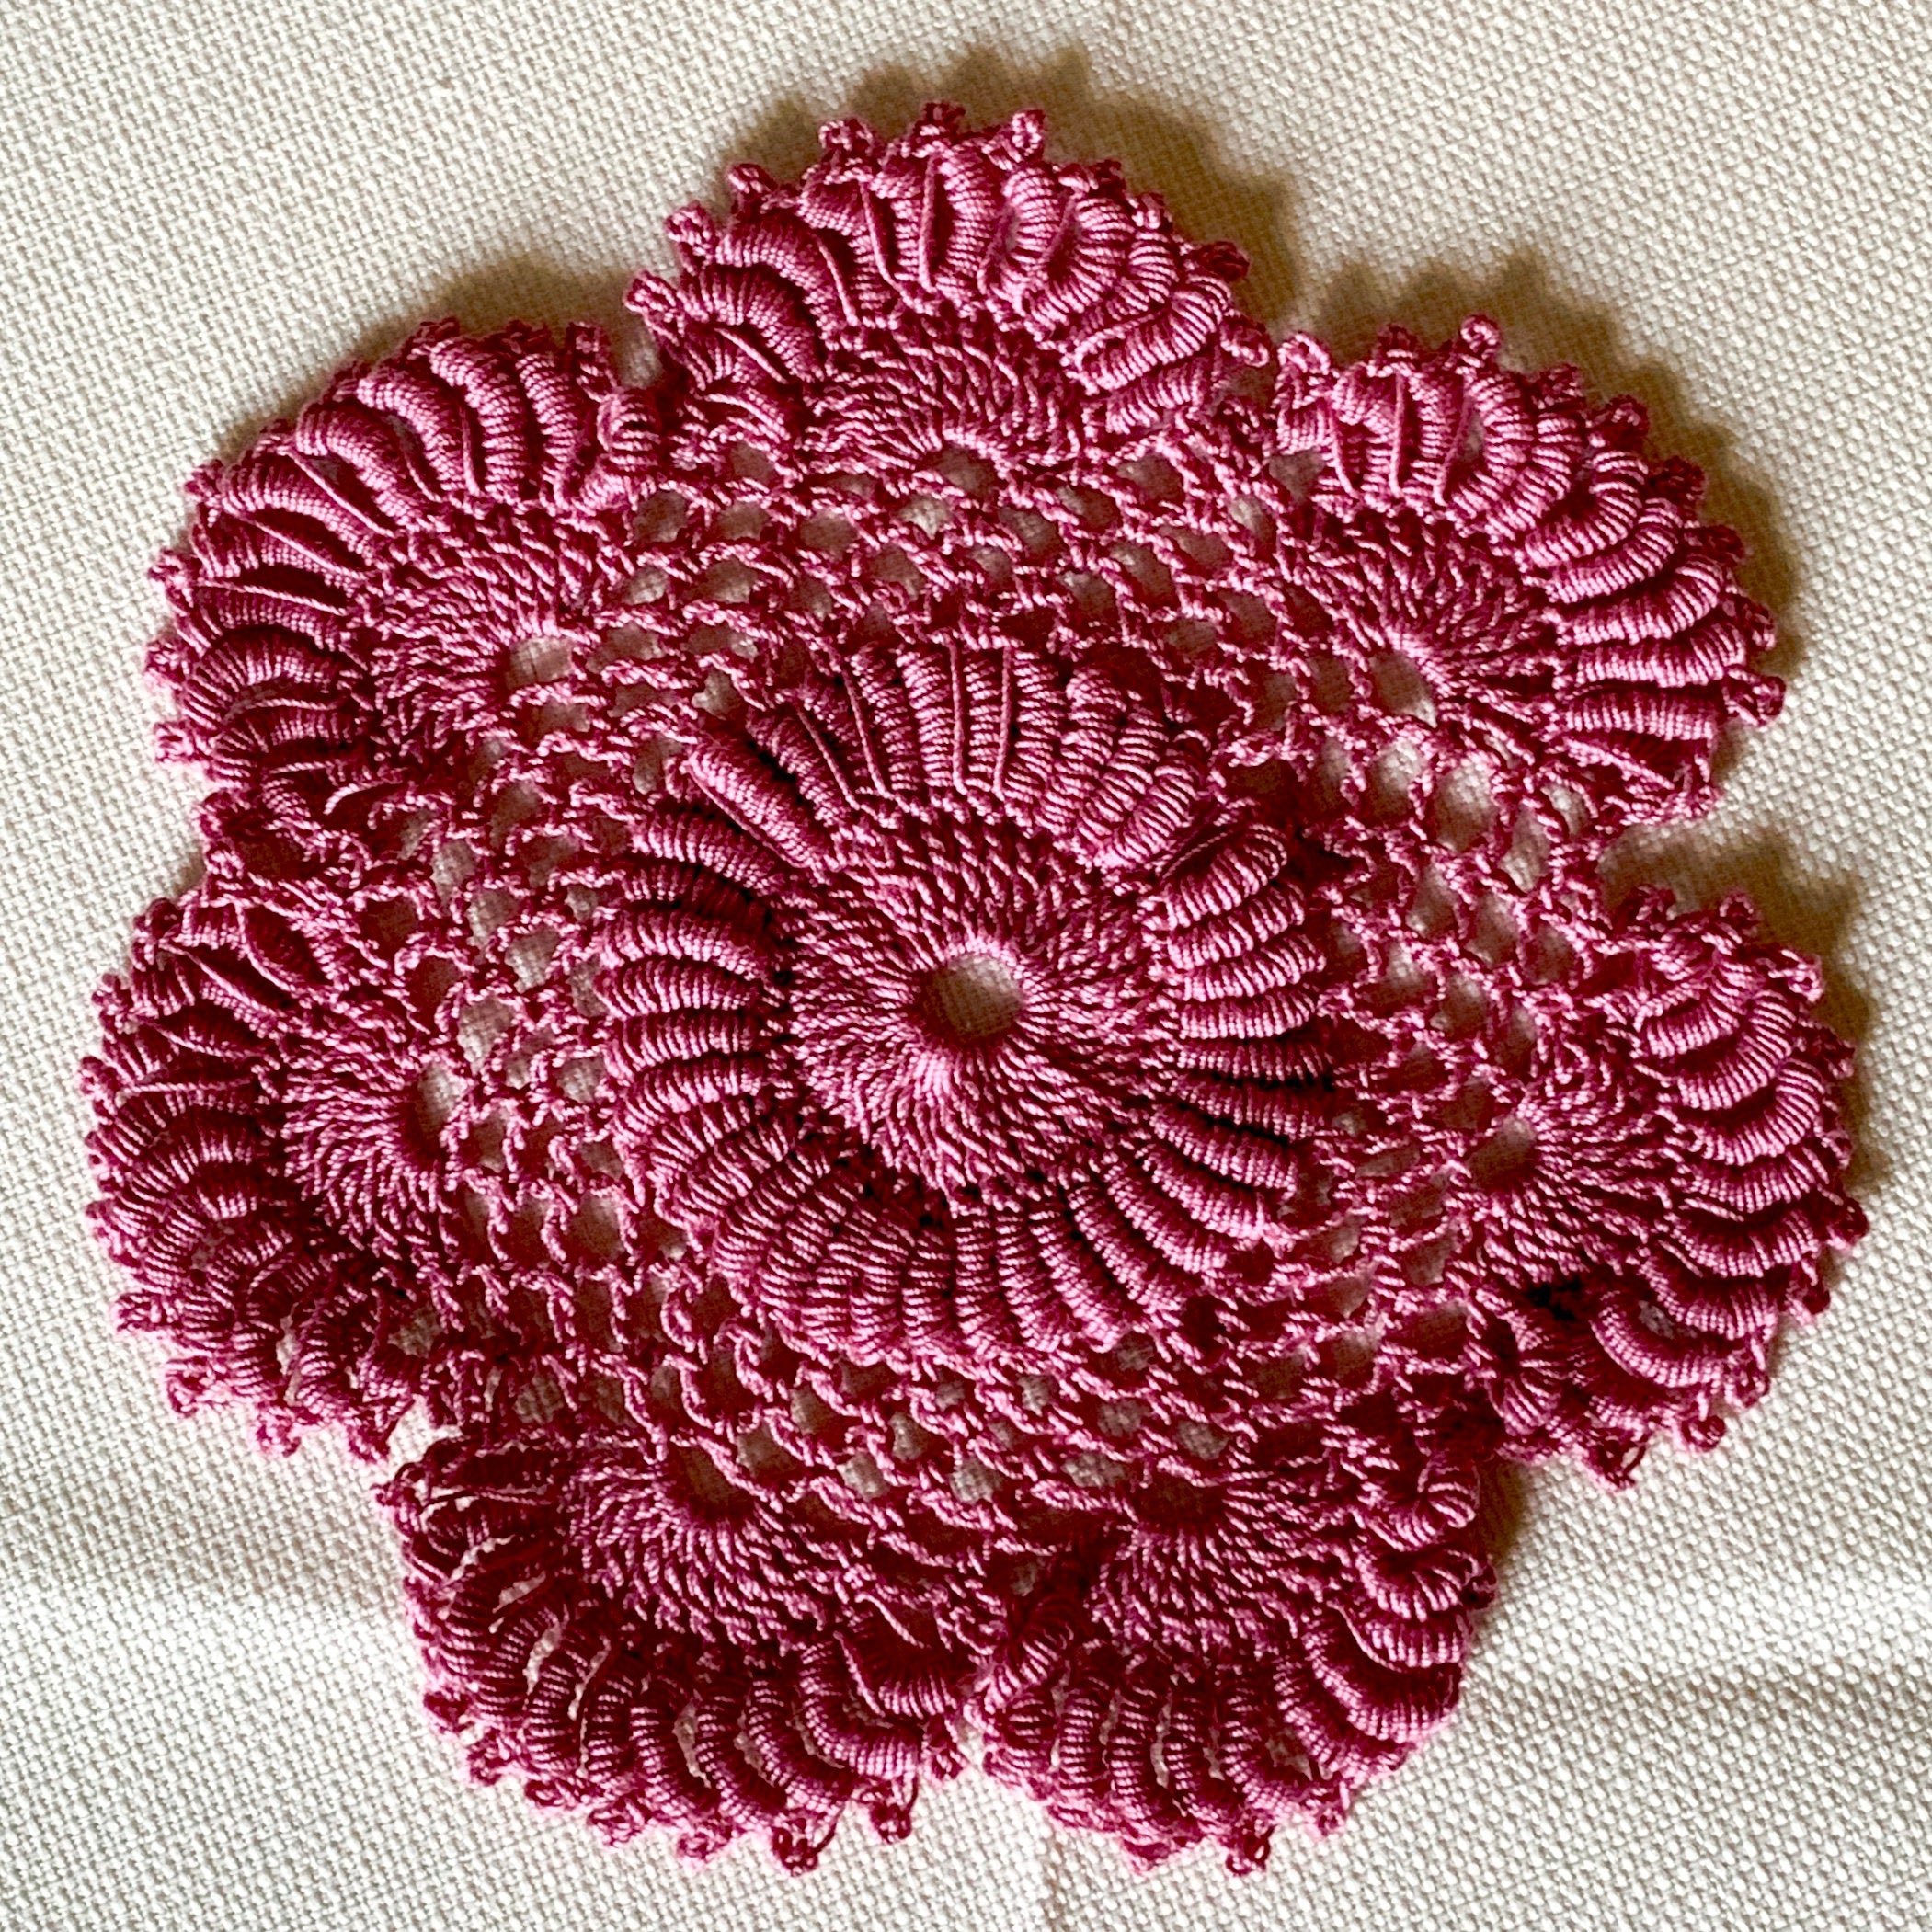 Round Crocheted Doilies-6 1/2“ Dimensional Doily-Set of 2 Round Doilies-Ecru (off white) Doily